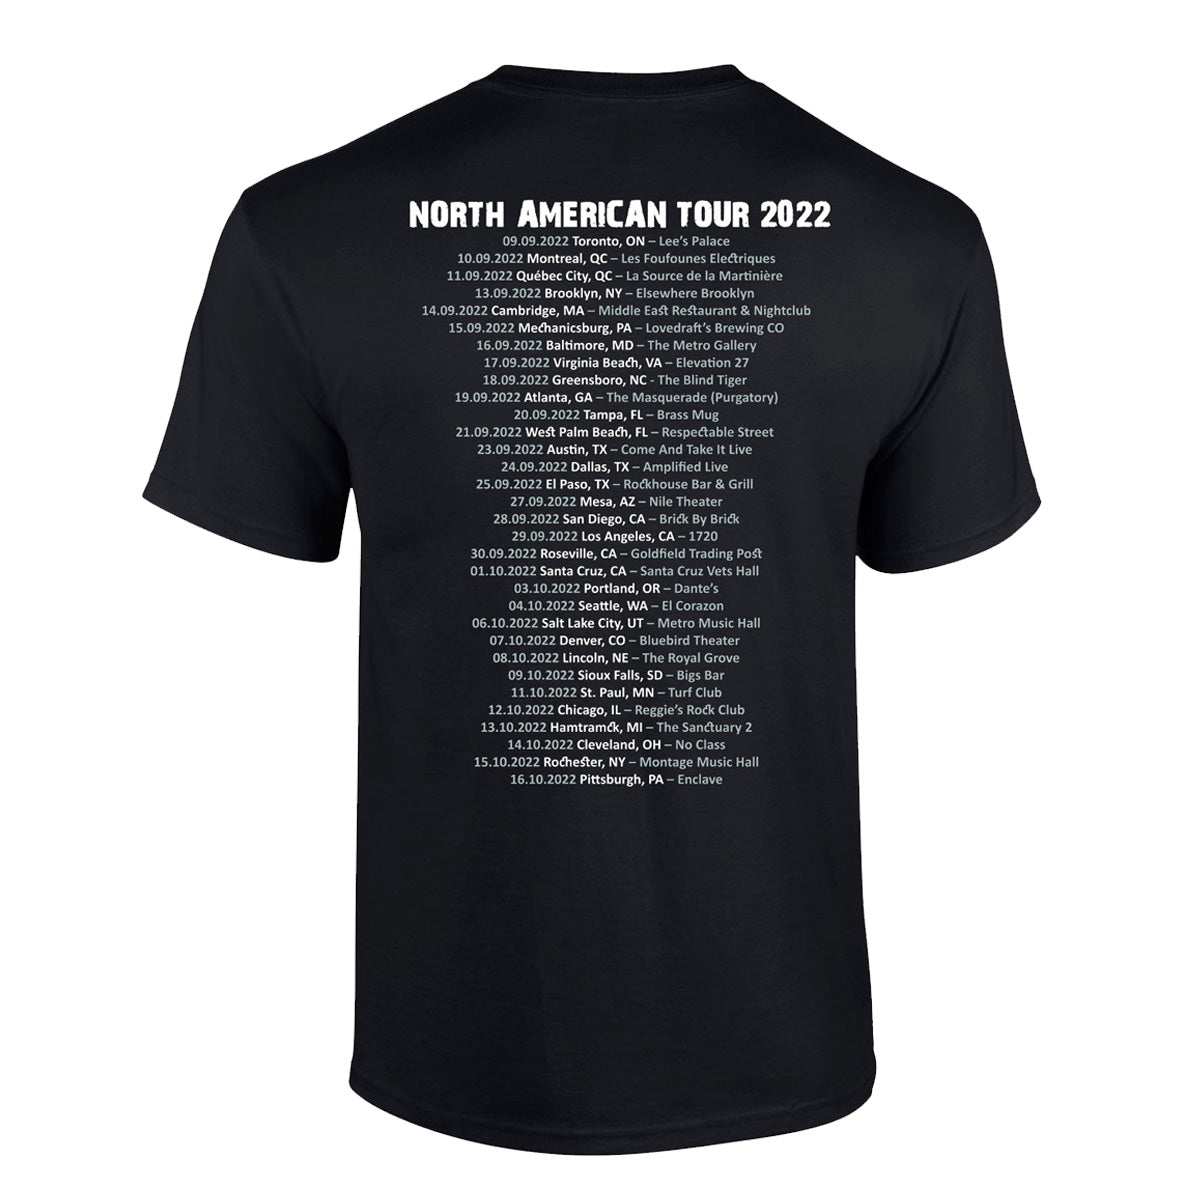 NORTH AMERICAN TOUR 2022 T-SHIRT